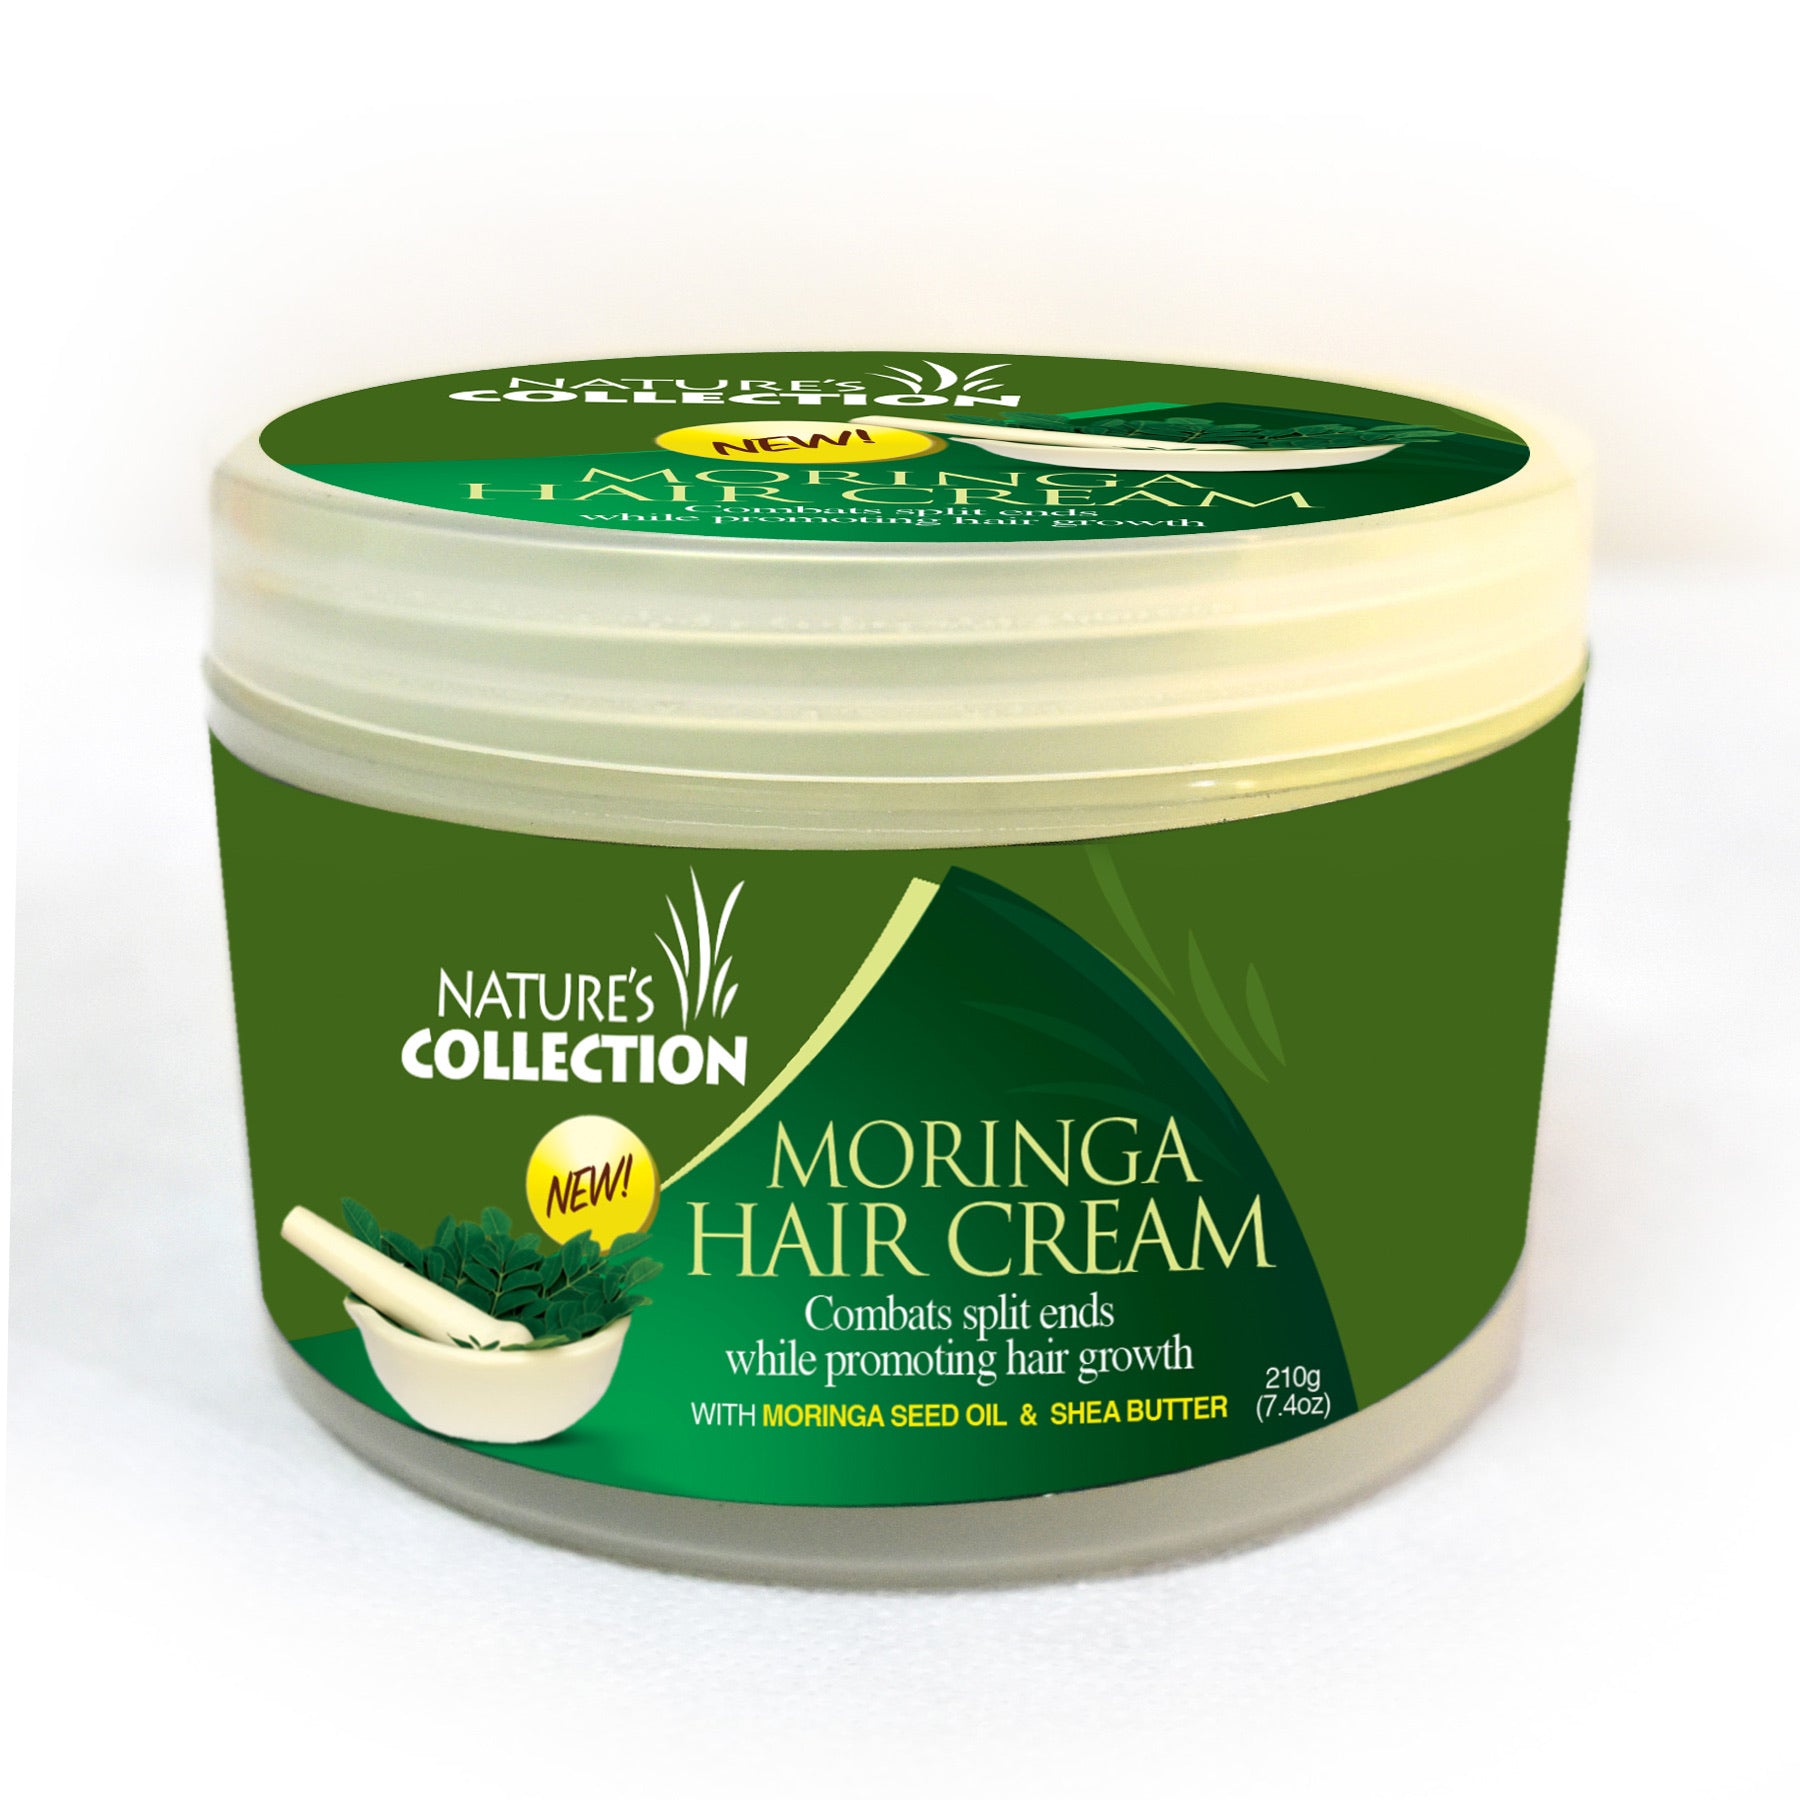 Nature’s collection moringa hair cream 7.4oz